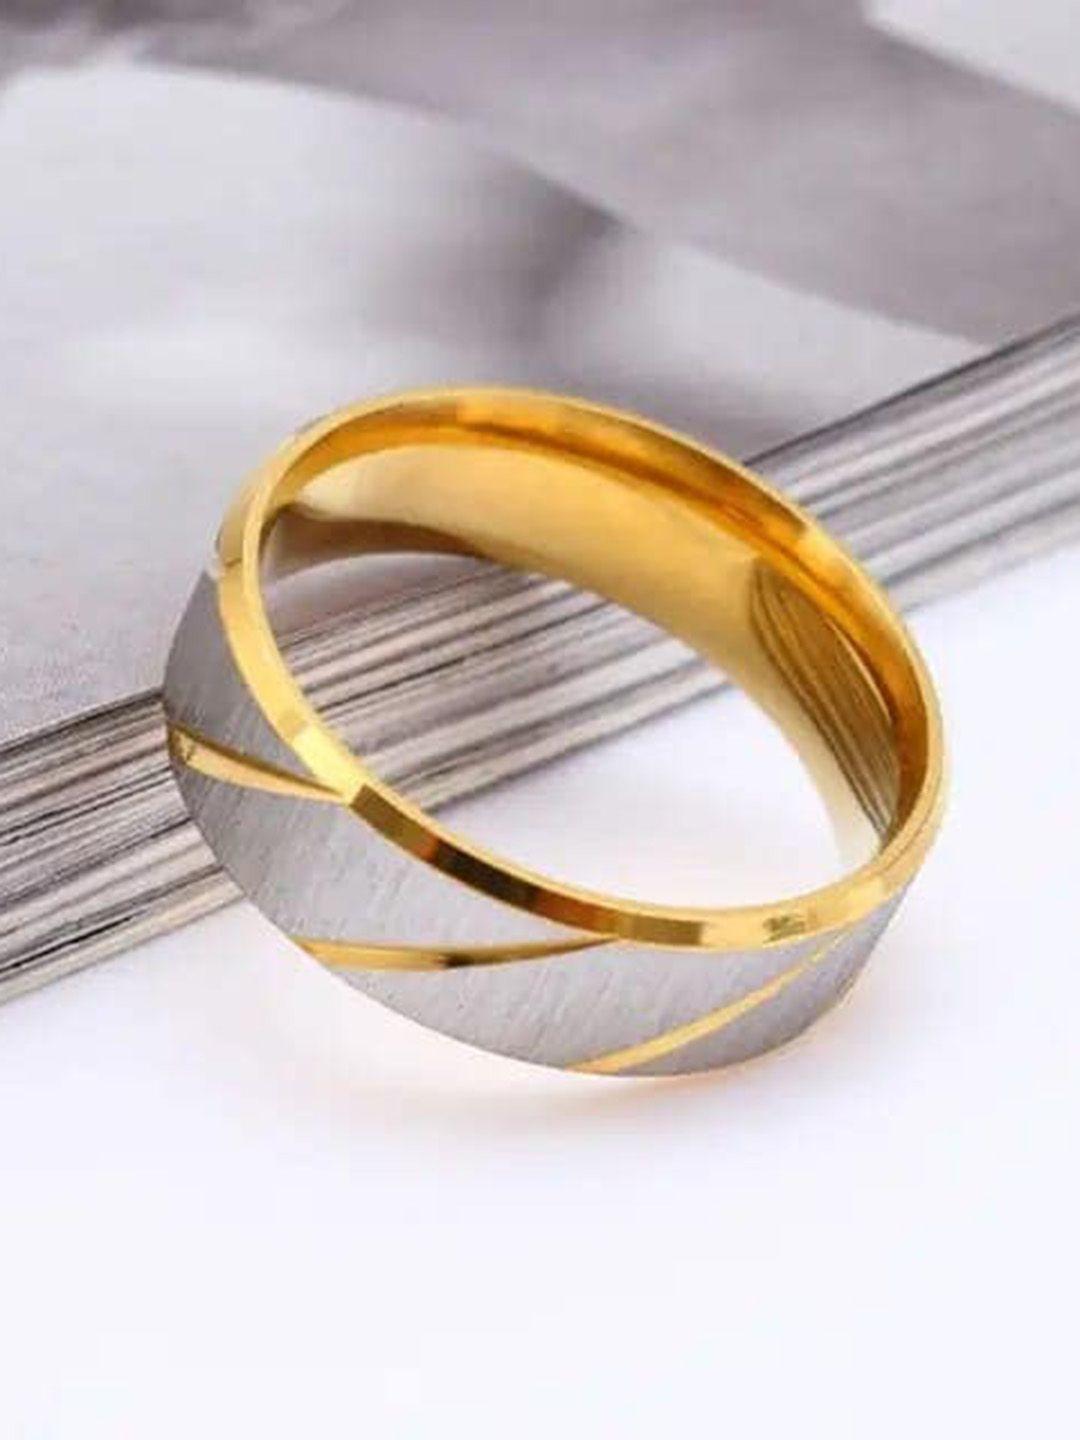 vien gold-plated stripes designed stainless steel finger ring